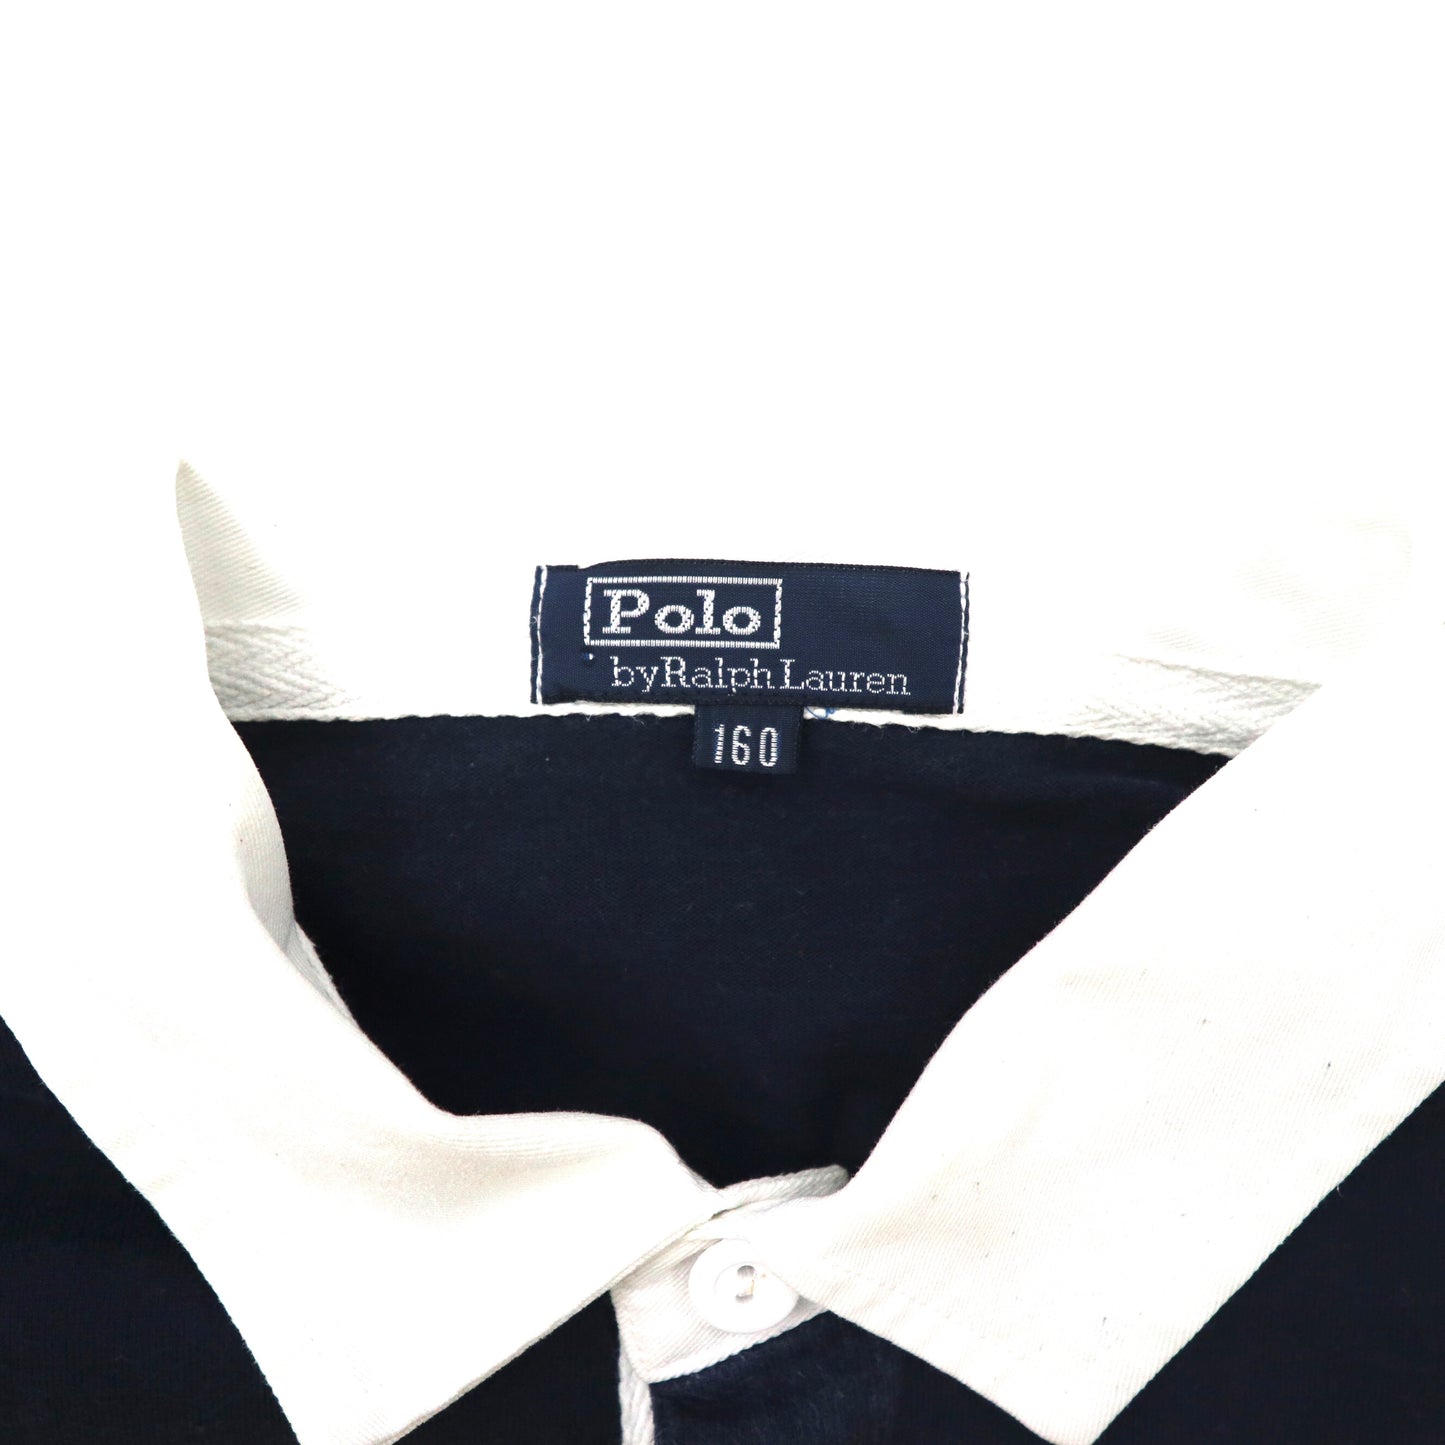 POLO BY RALPH LAUREN ラガーシャツ 160 イエロー コットン スモールポニー刺繍